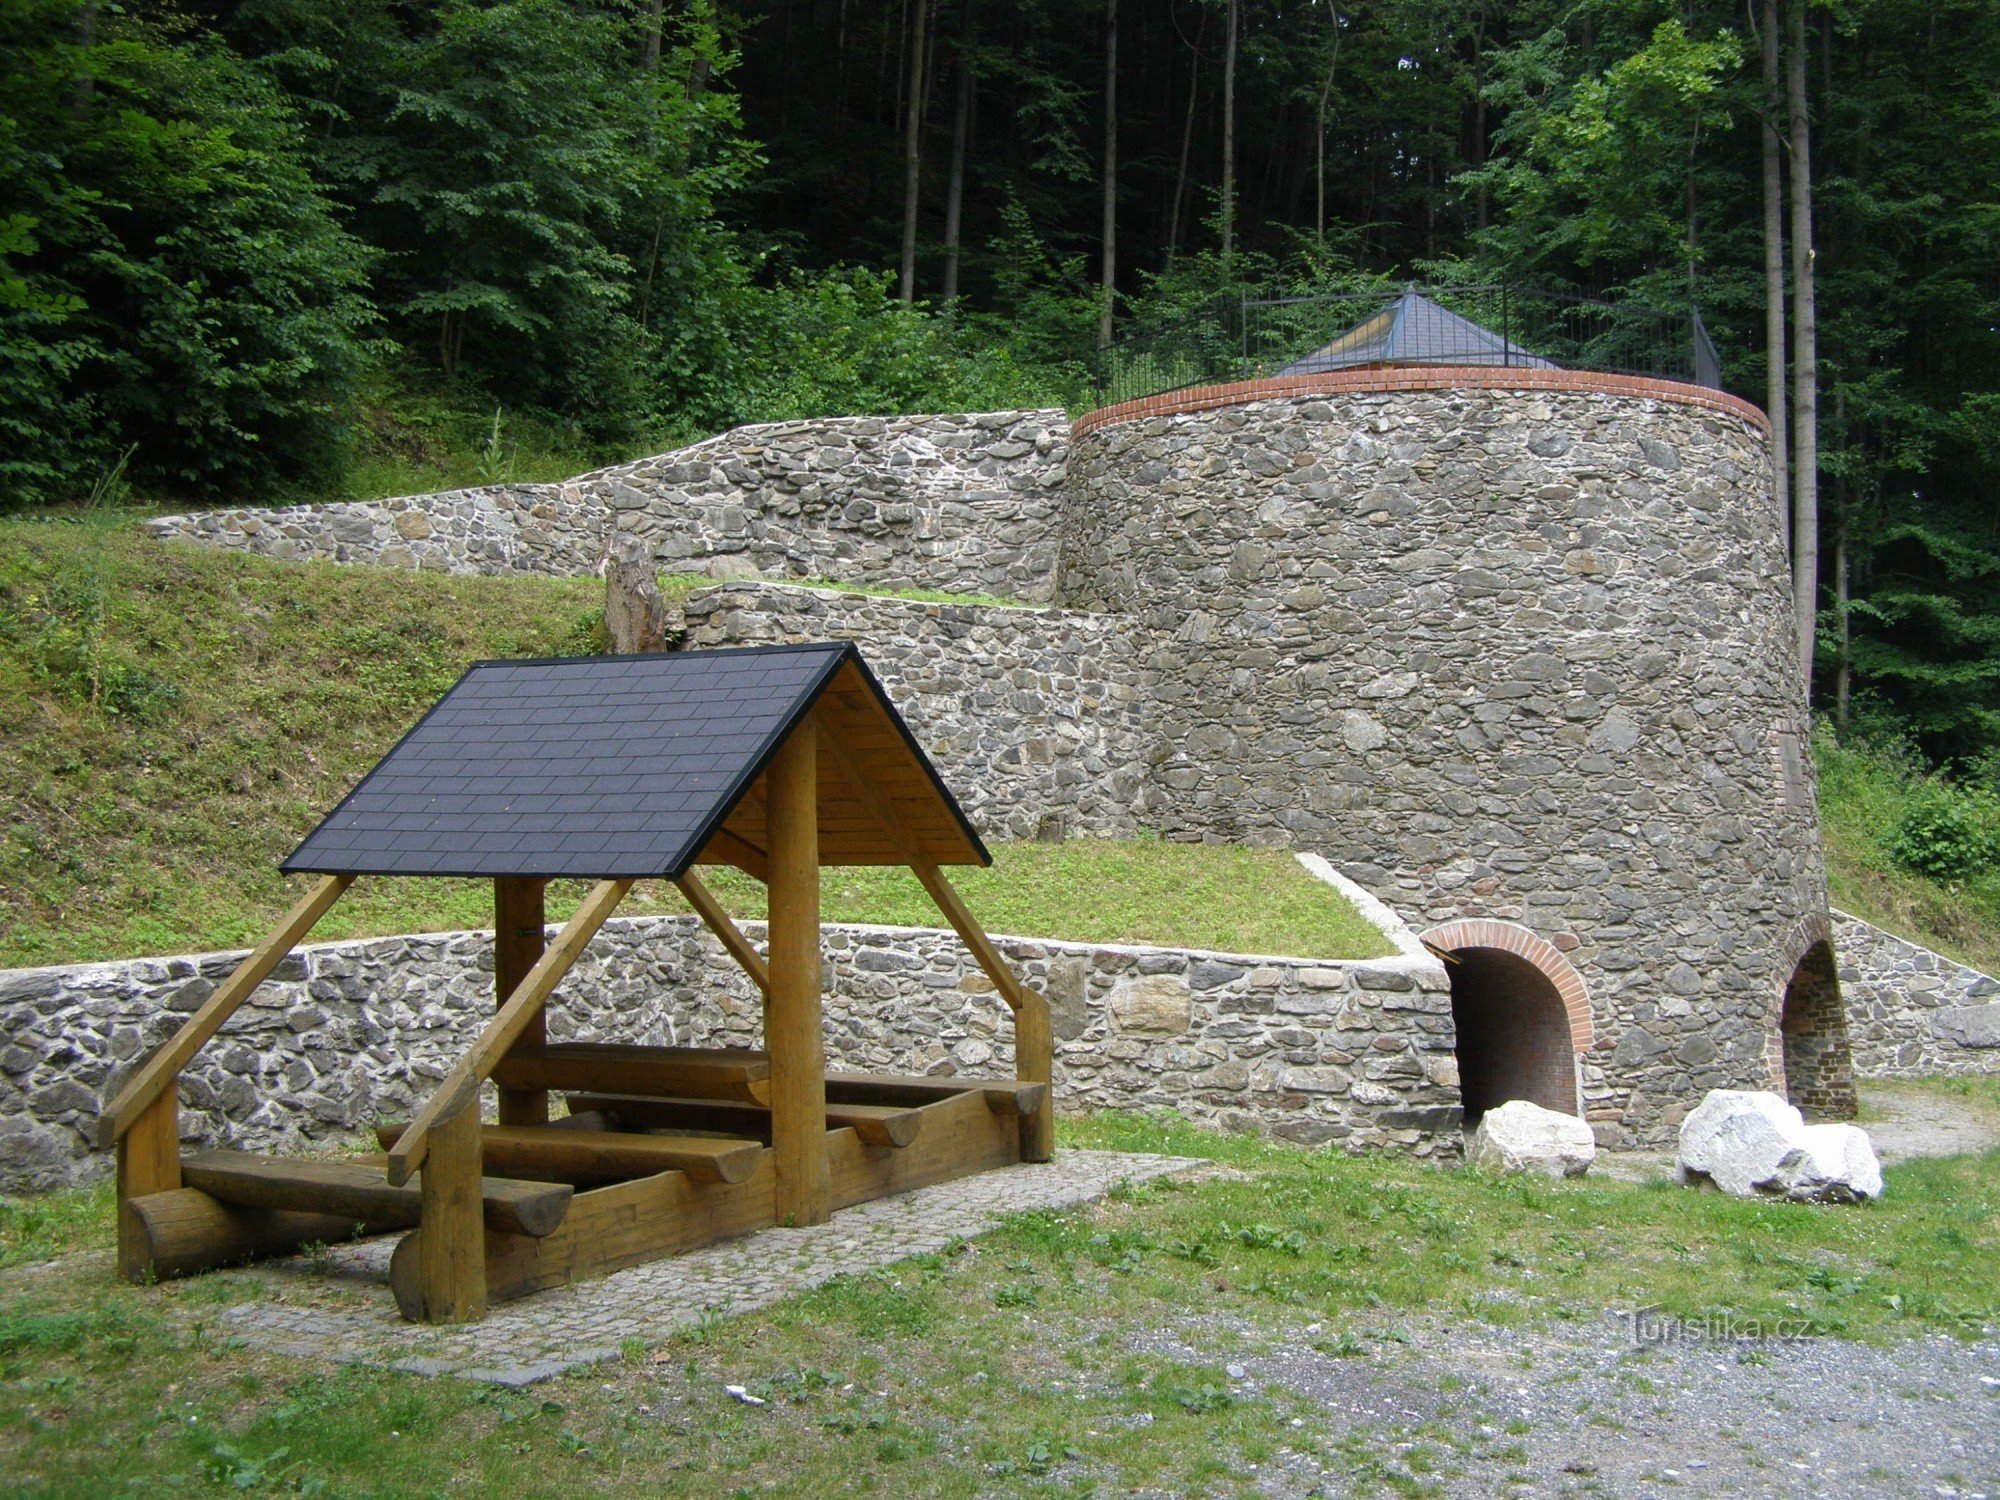 Limestone near Javorník